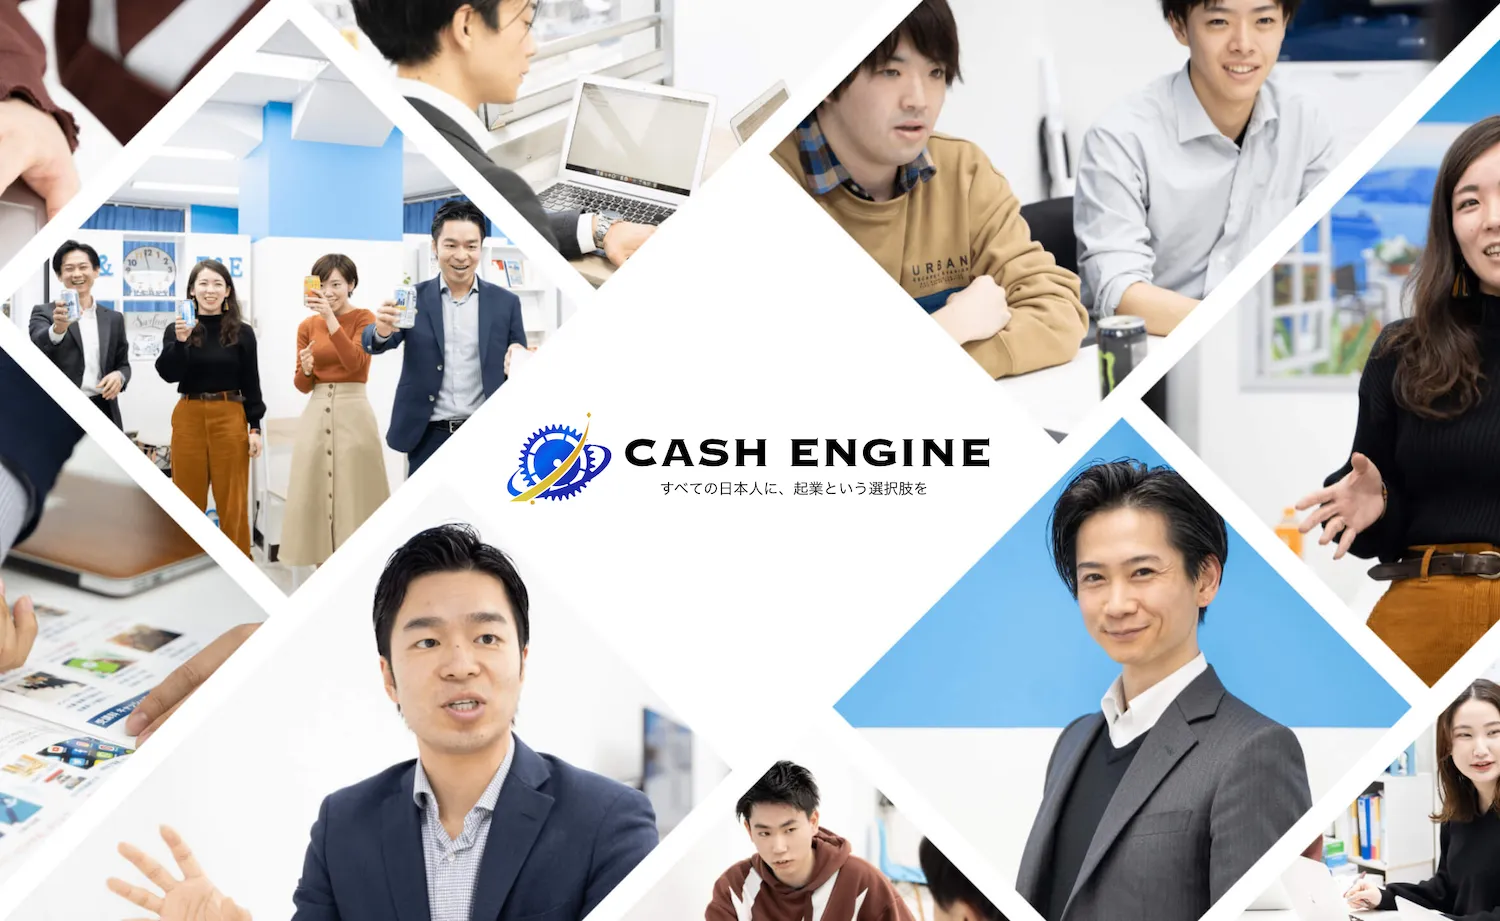 Cash Engine